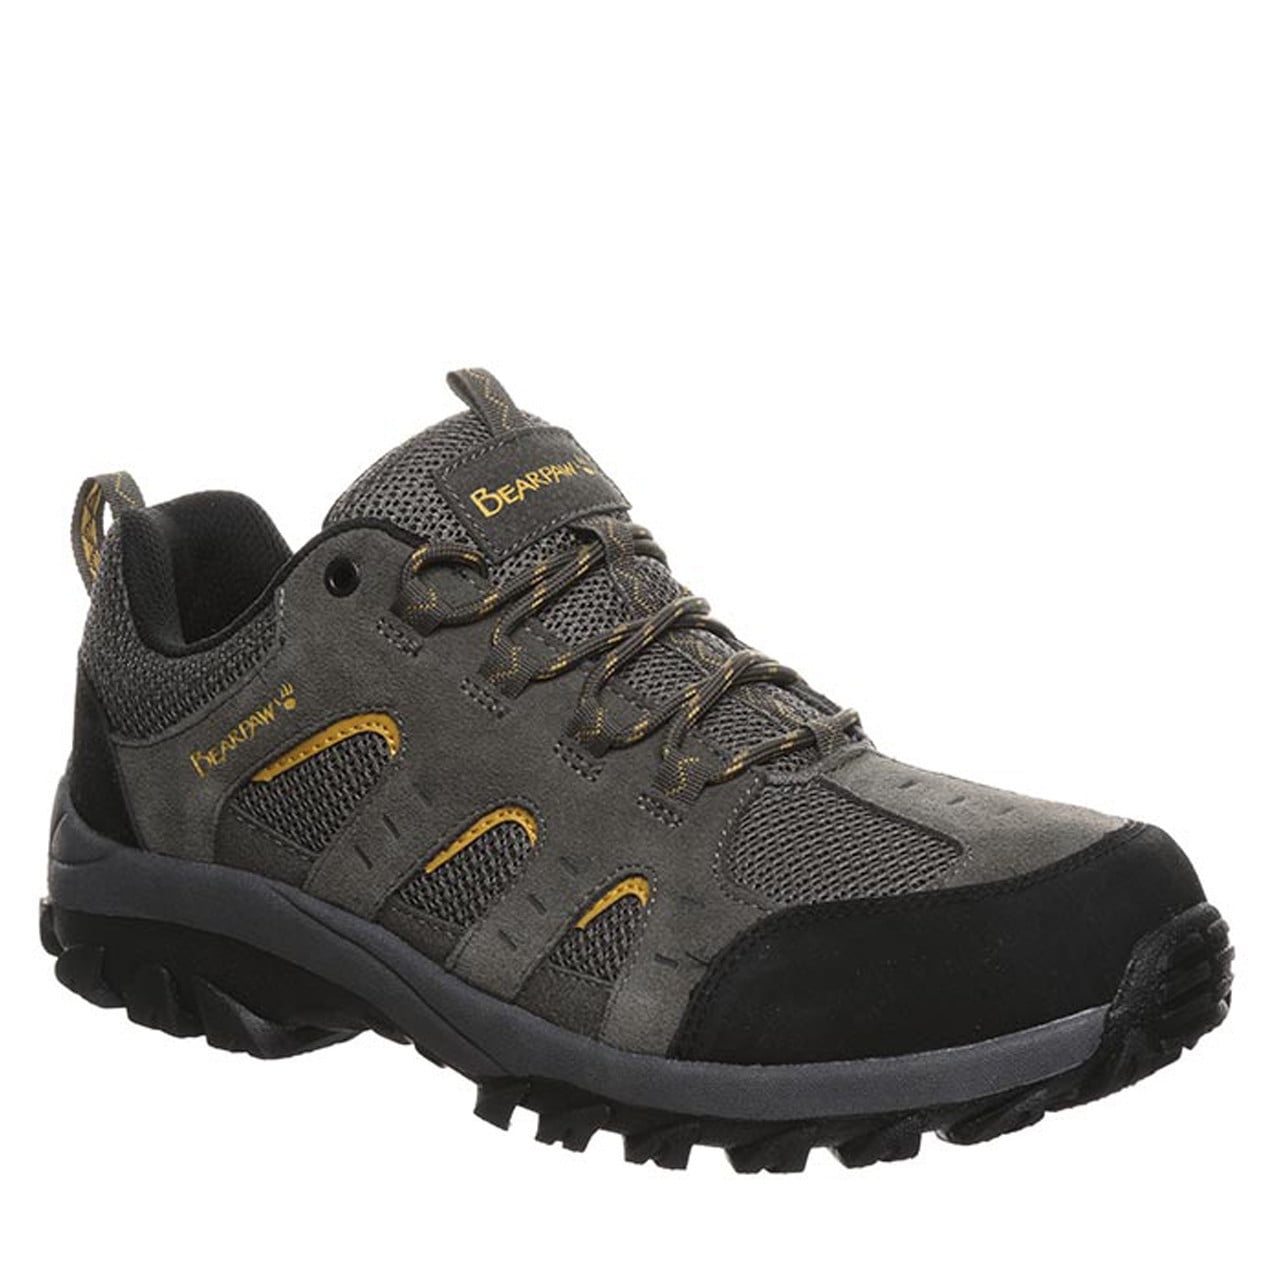 Bearpaw Men's Blaze Hiking Shoes - Medium & Wide Width - Walmart.com